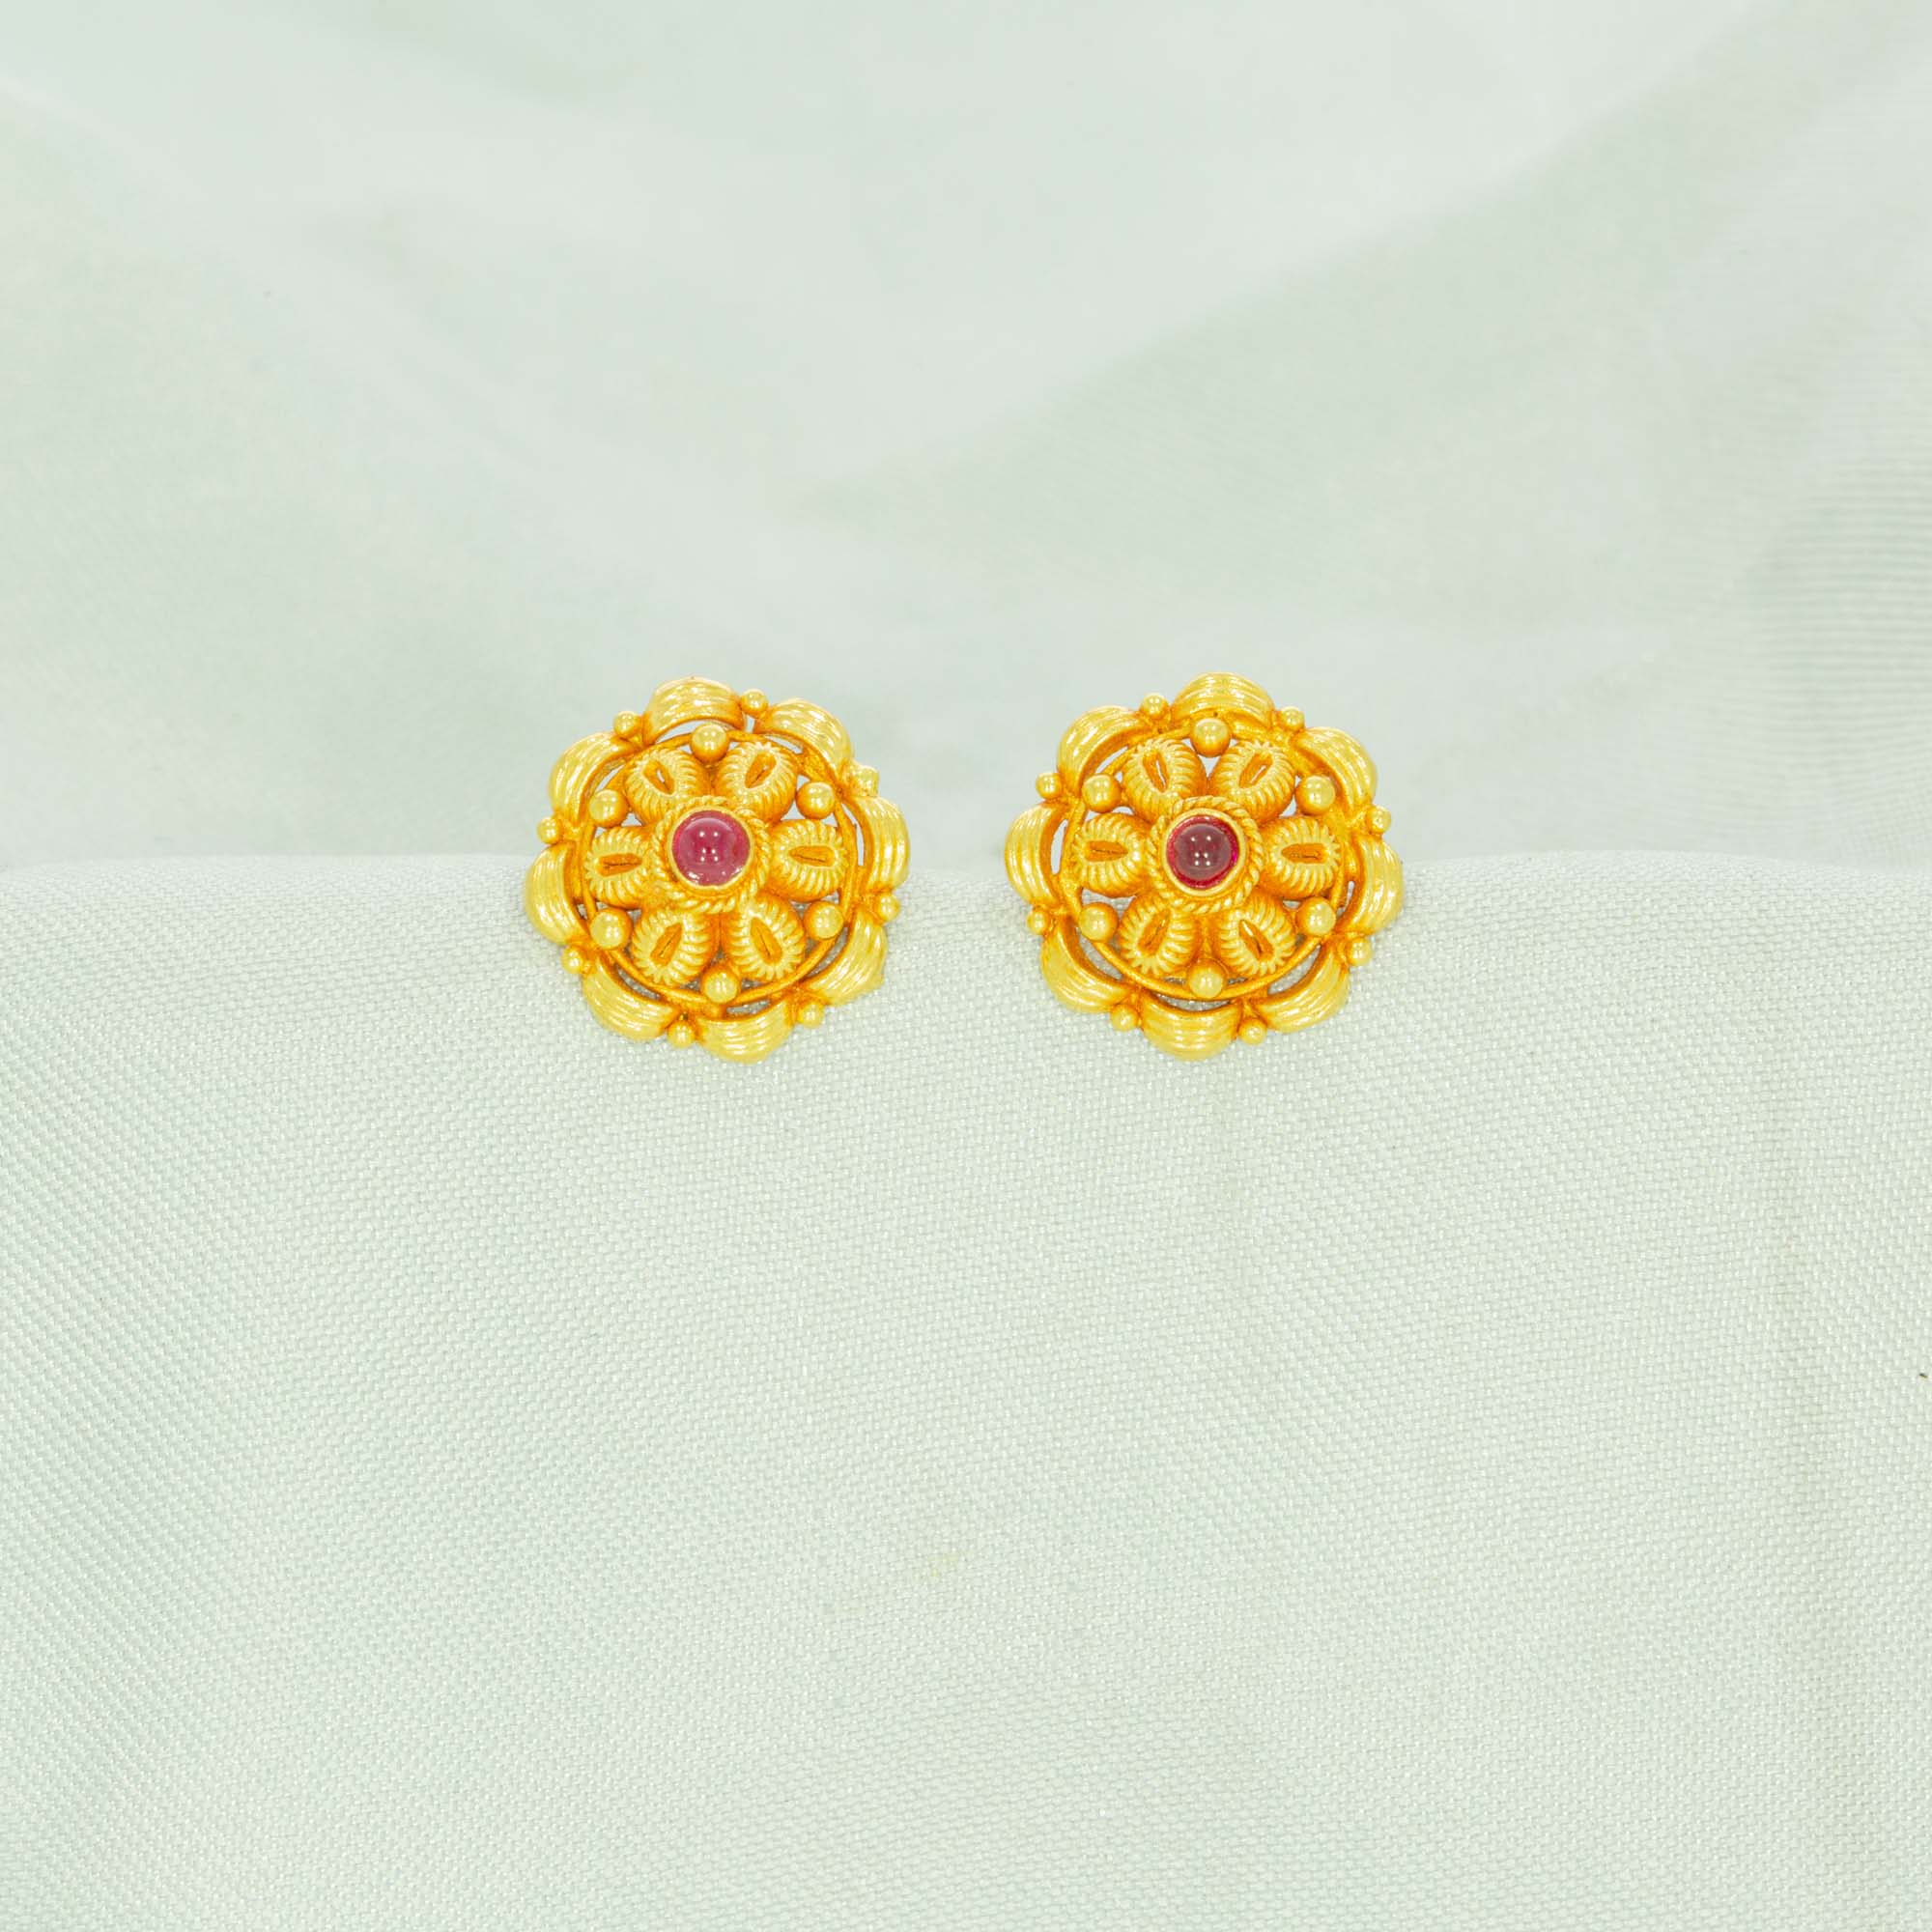 Grand Gold Stud Earrings